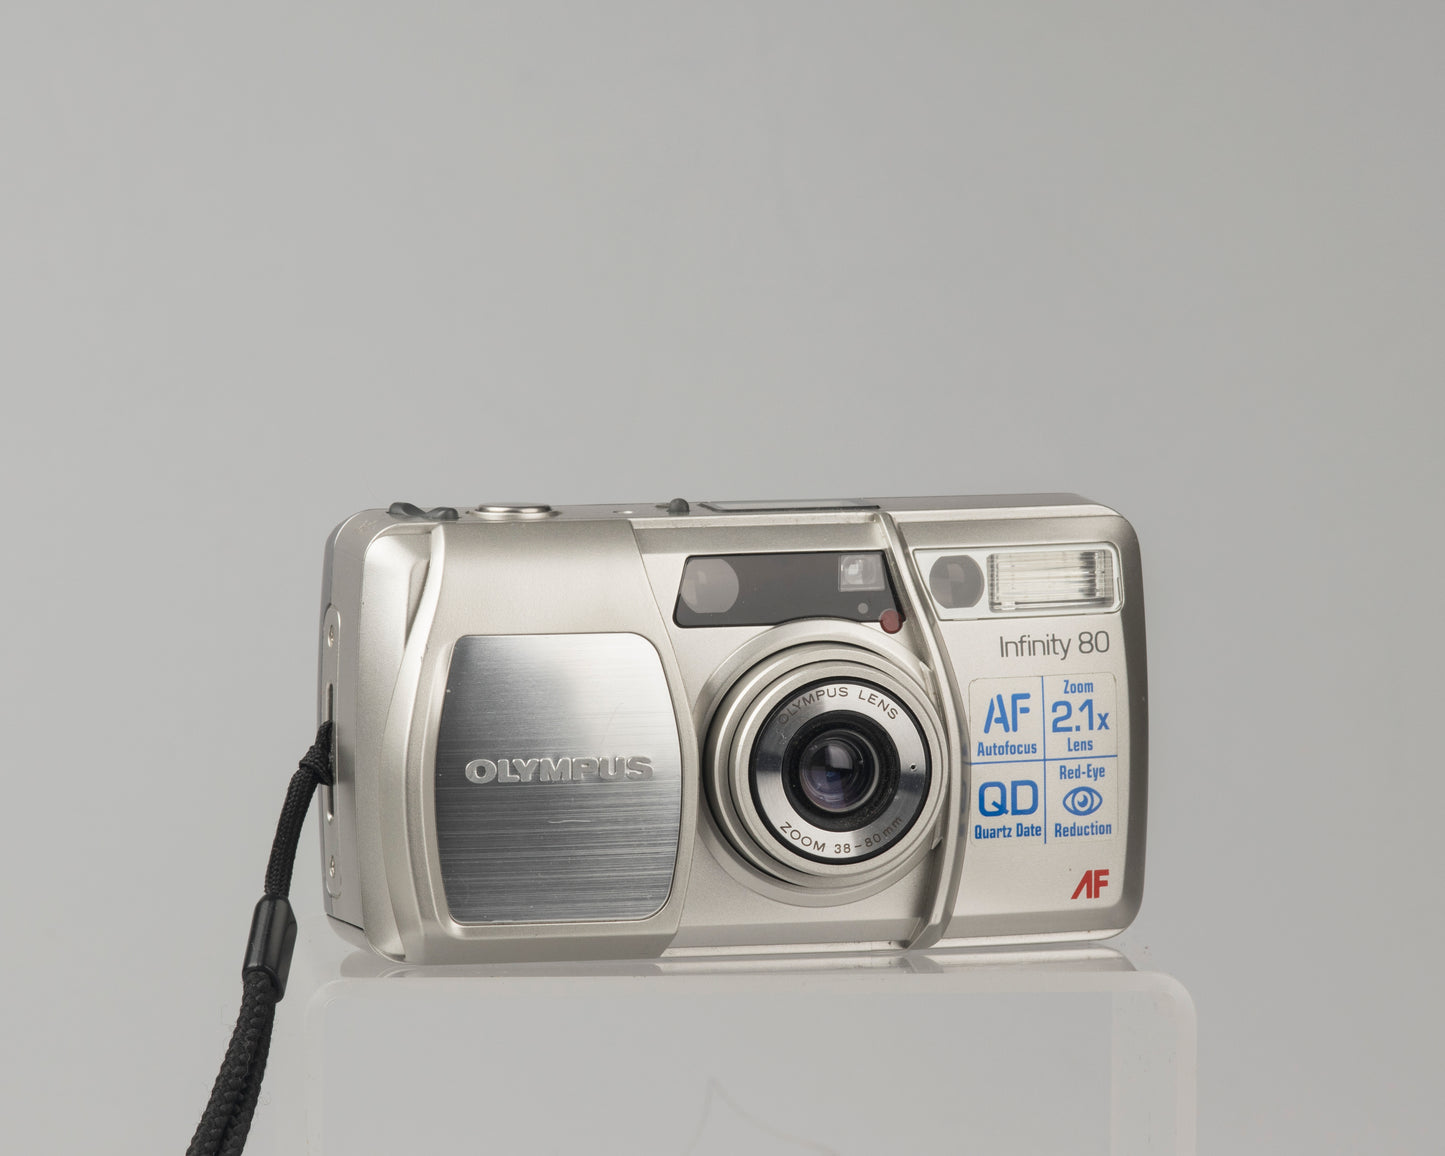 Olympus Infinity 80 35mm camera